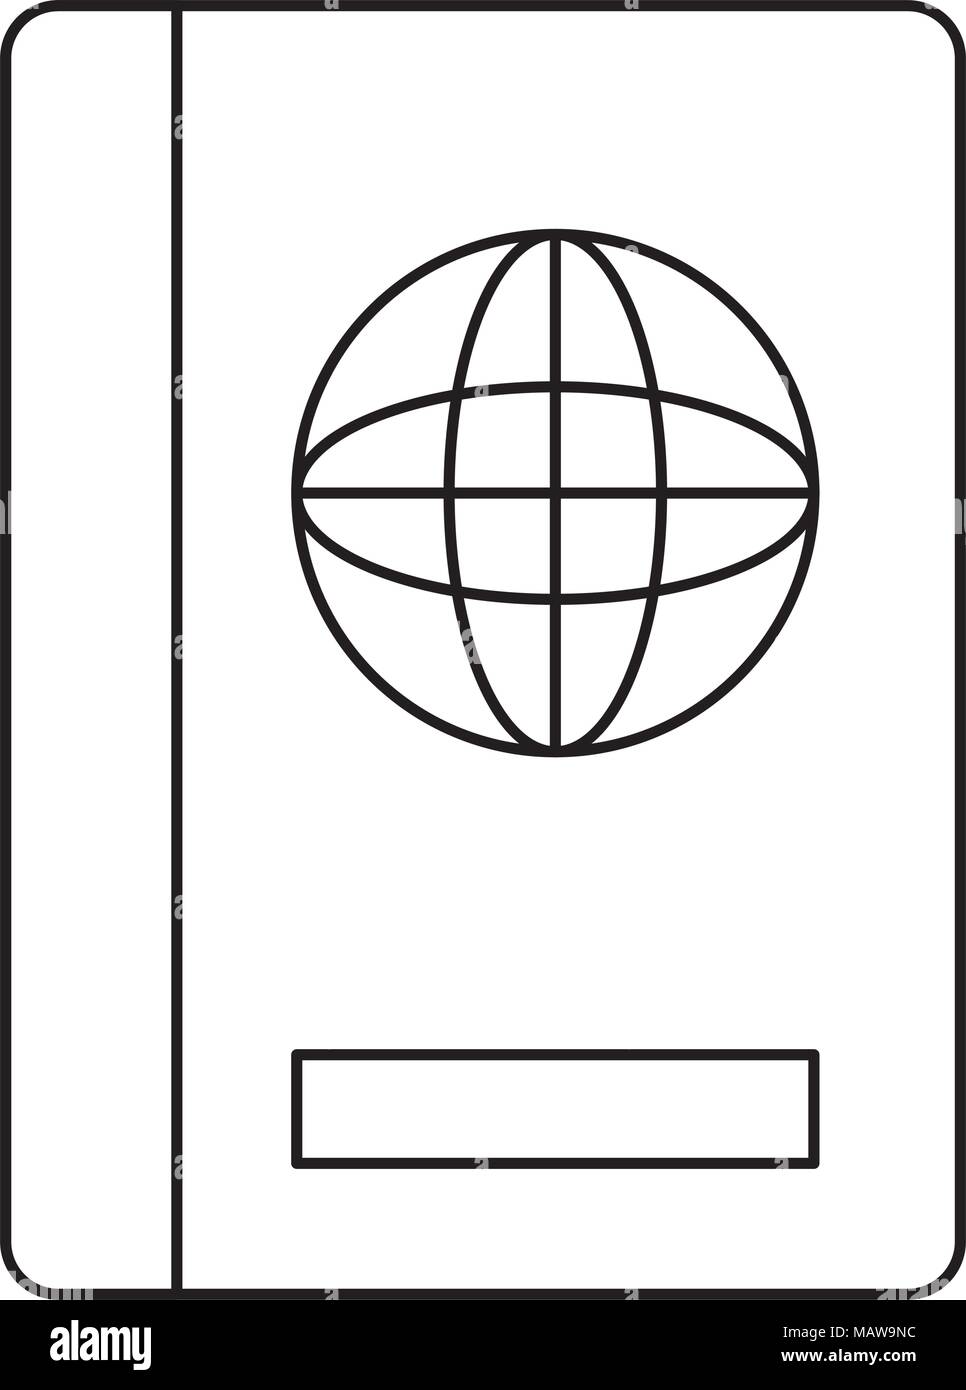 passport icon over white background, vector illustration Stock Vector